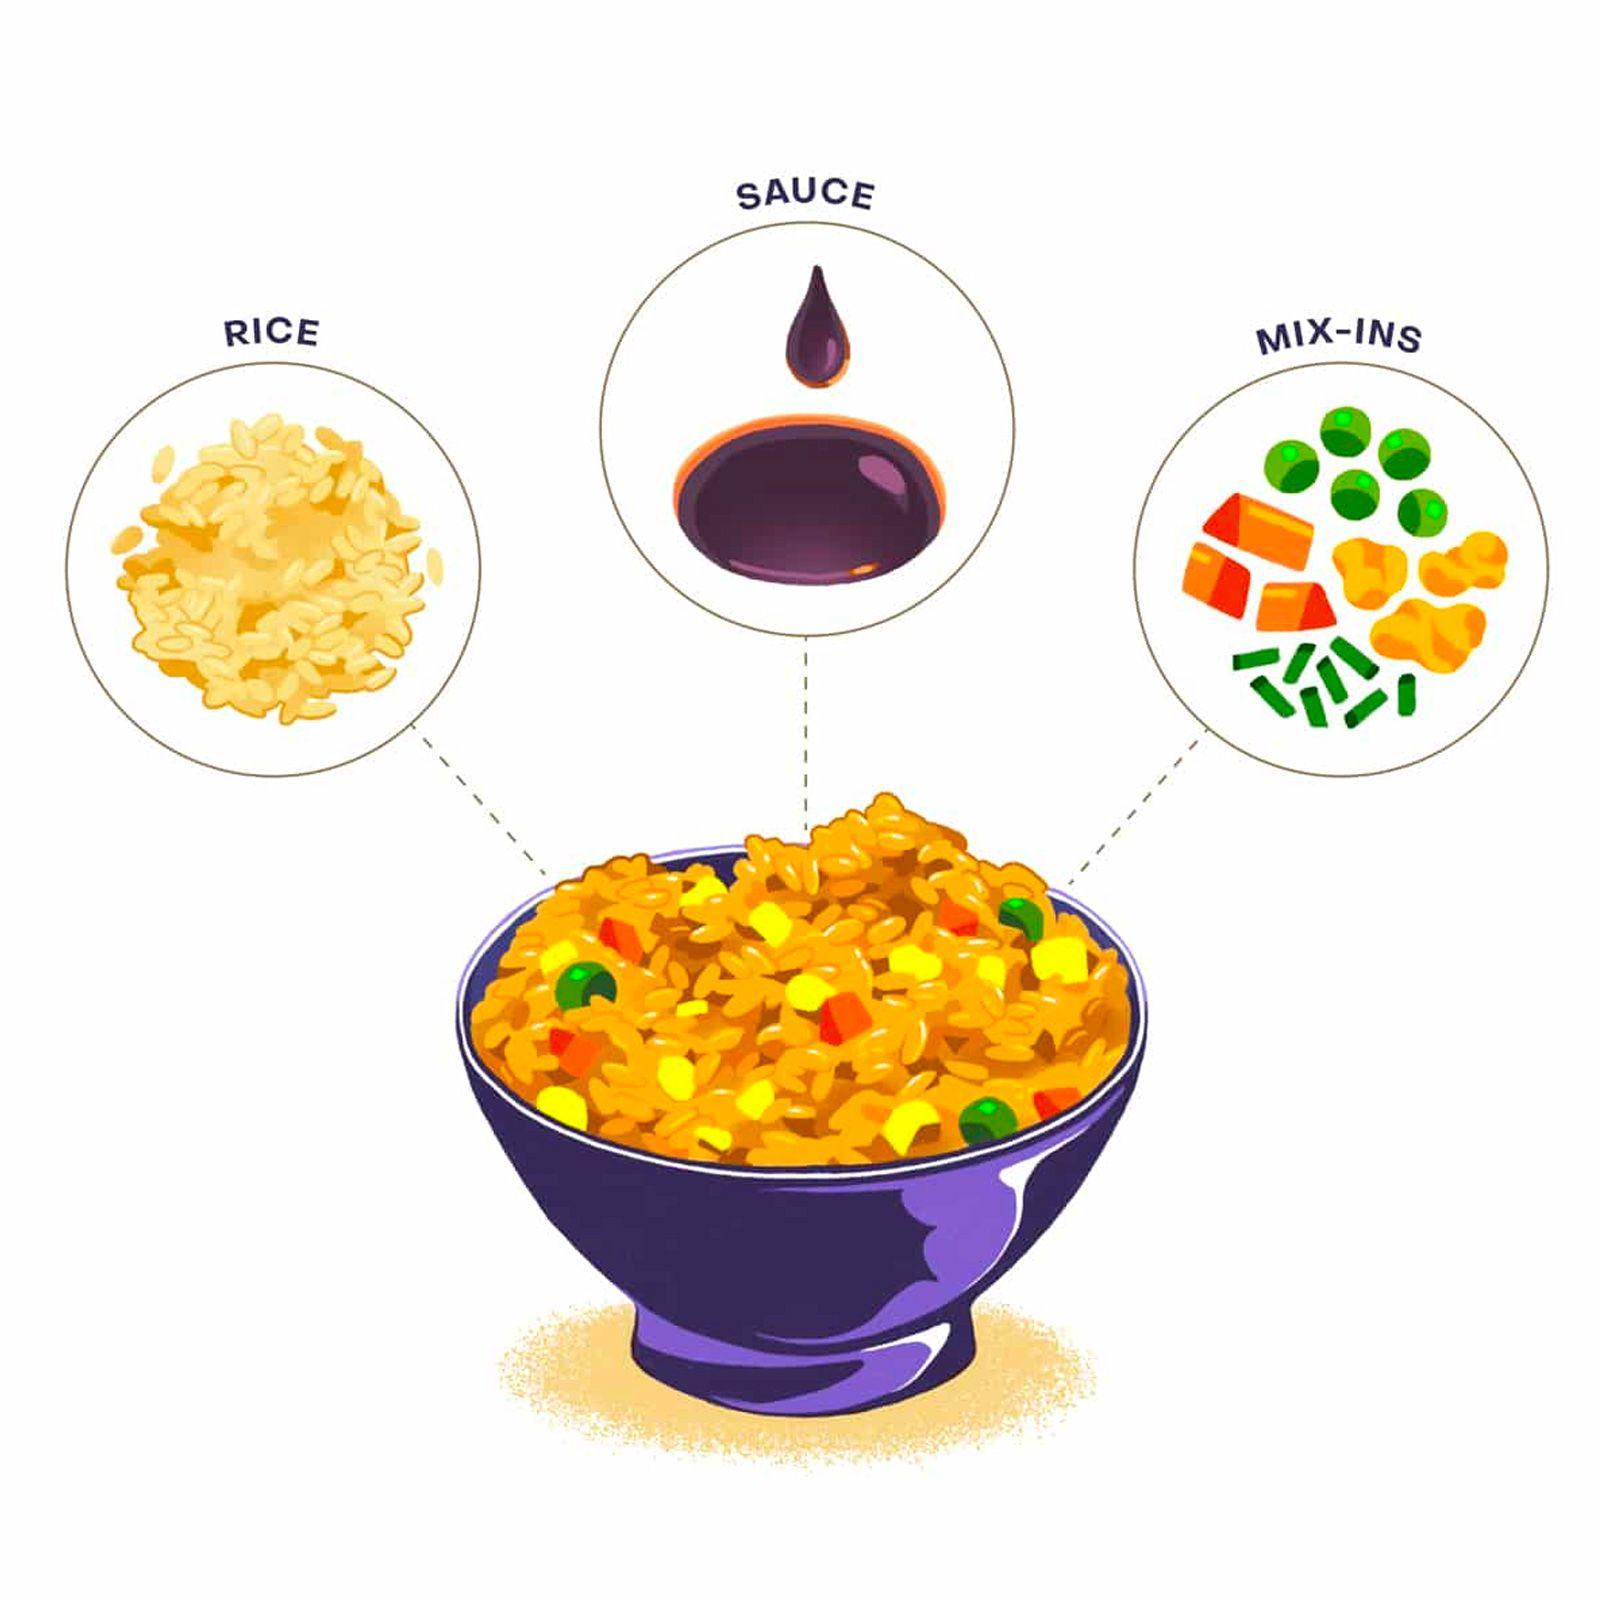 Fried-Rice-Sauce-Rice-Mix-Ins.jpg